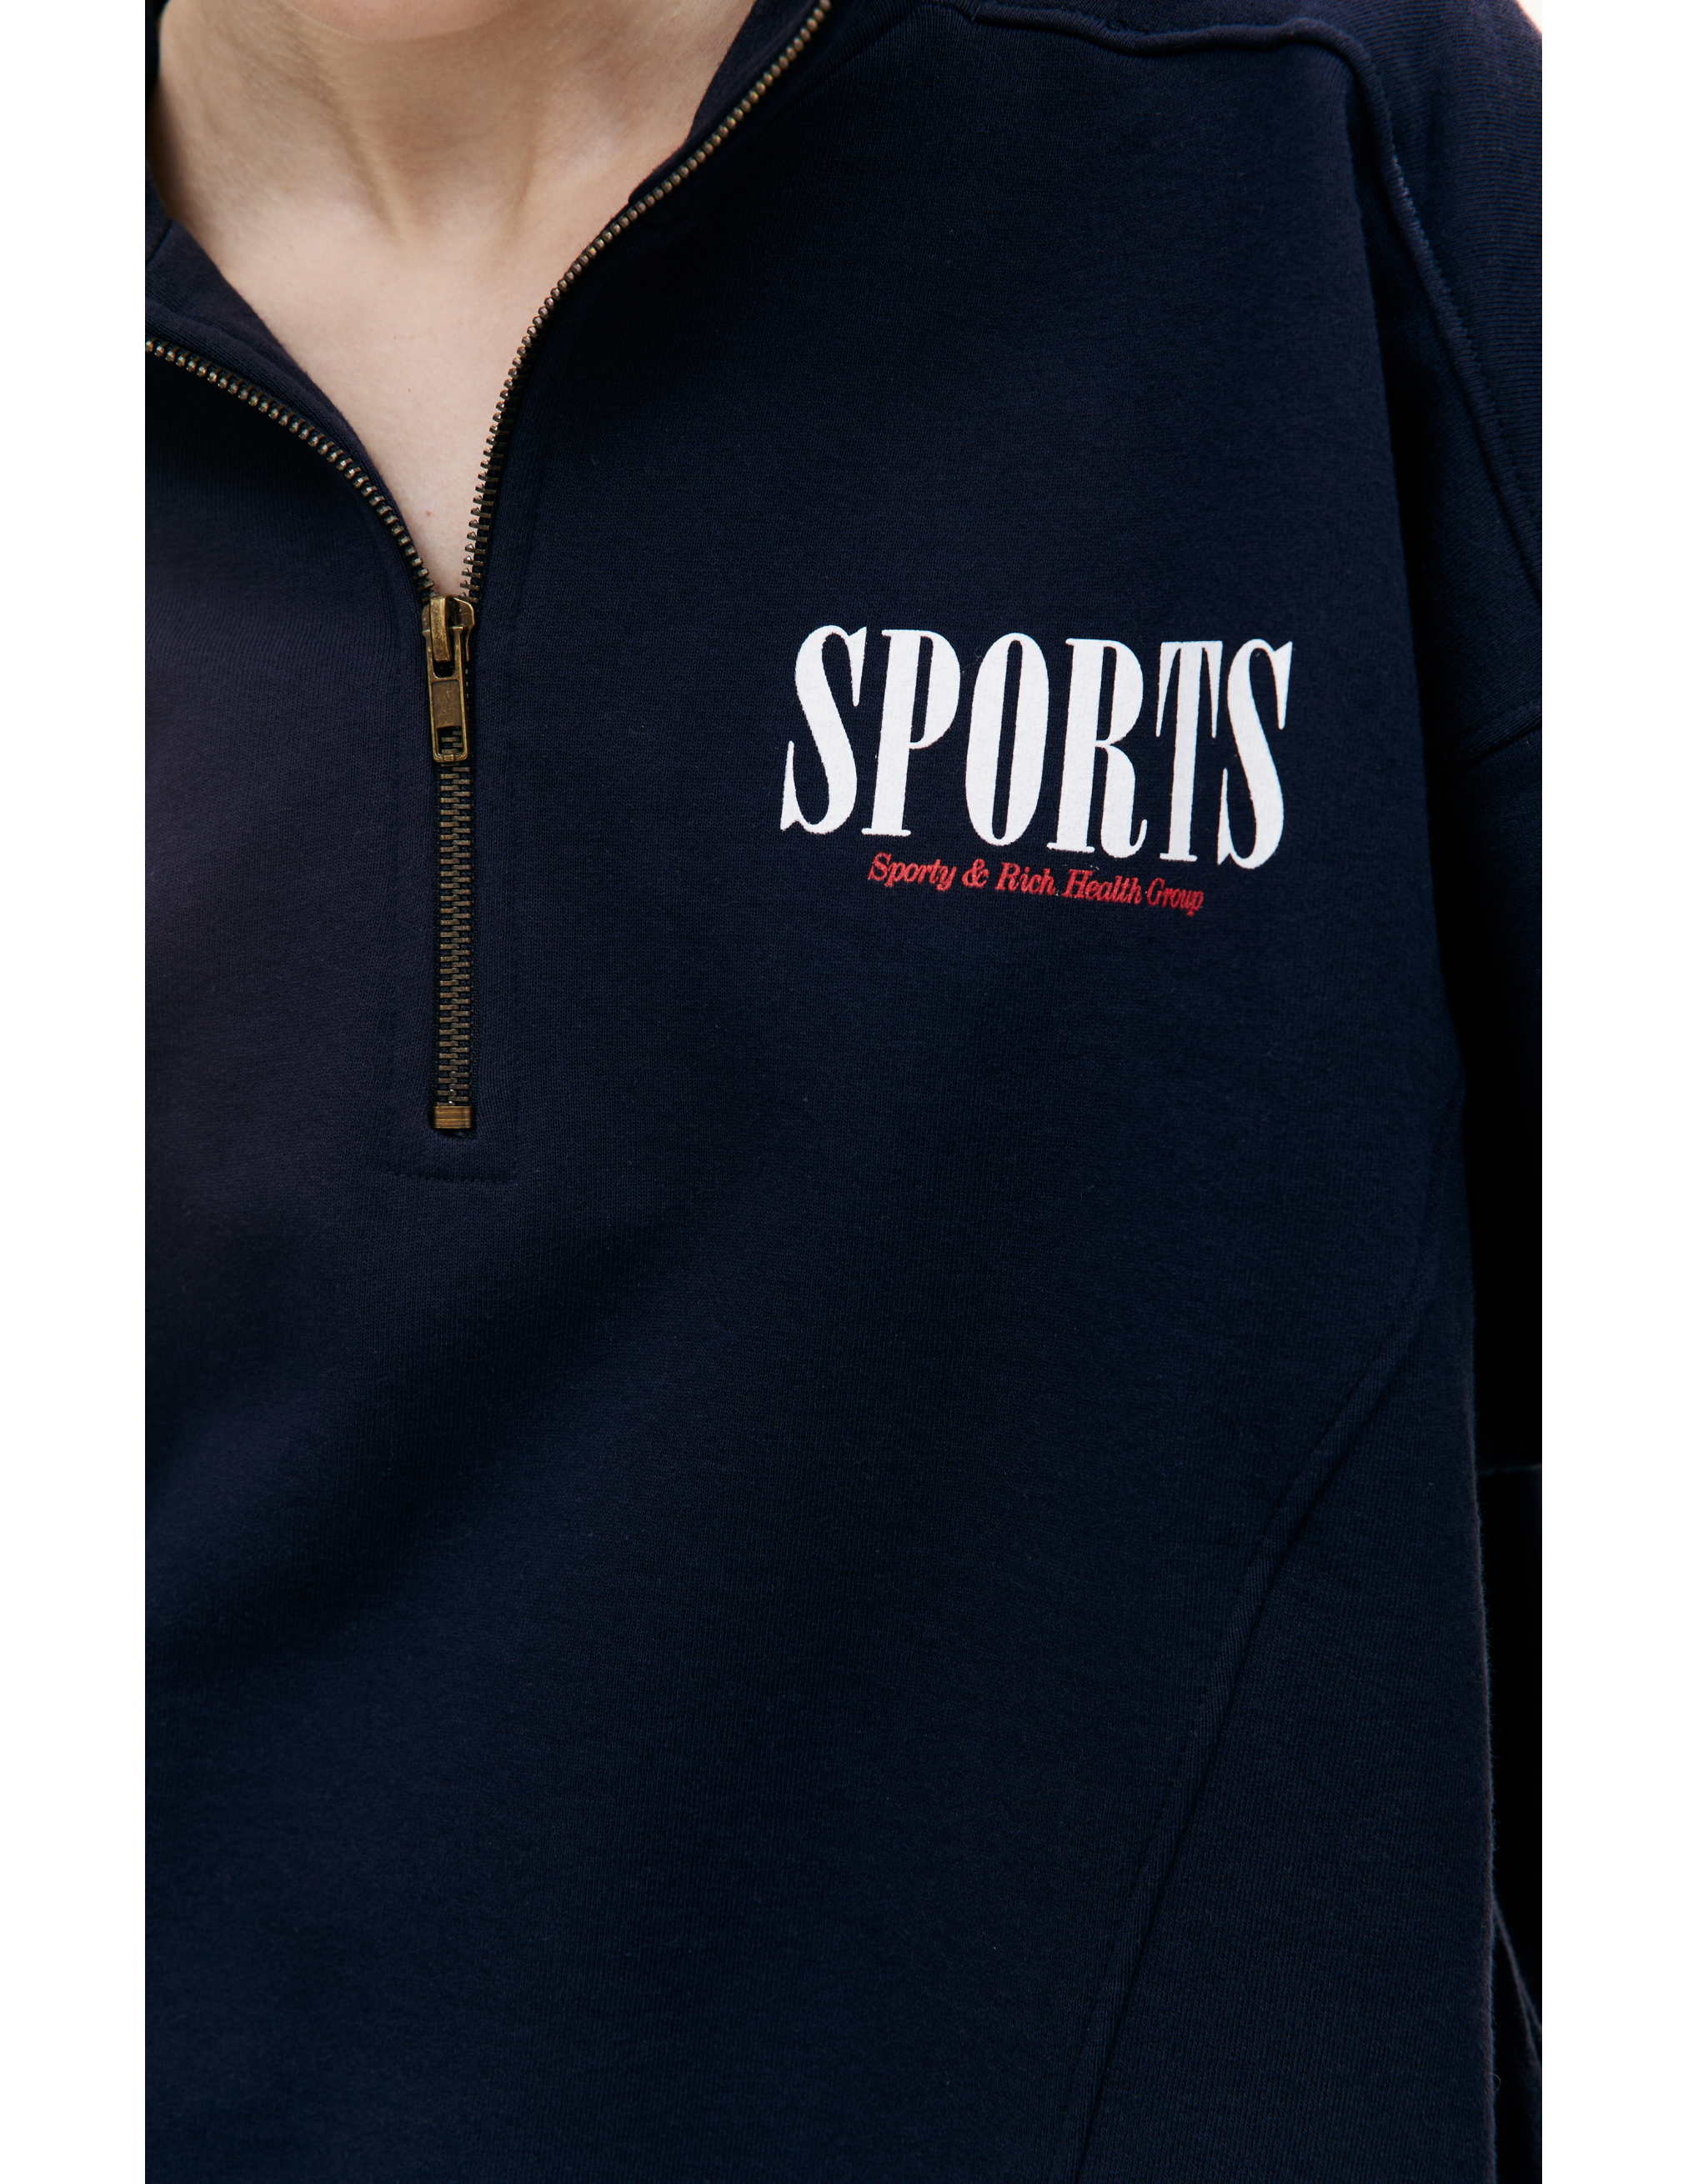 Свитшот на молнии с принтом Sports SPORTY & RICH QZAW233NA, размер S;M;L;XL - фото 5